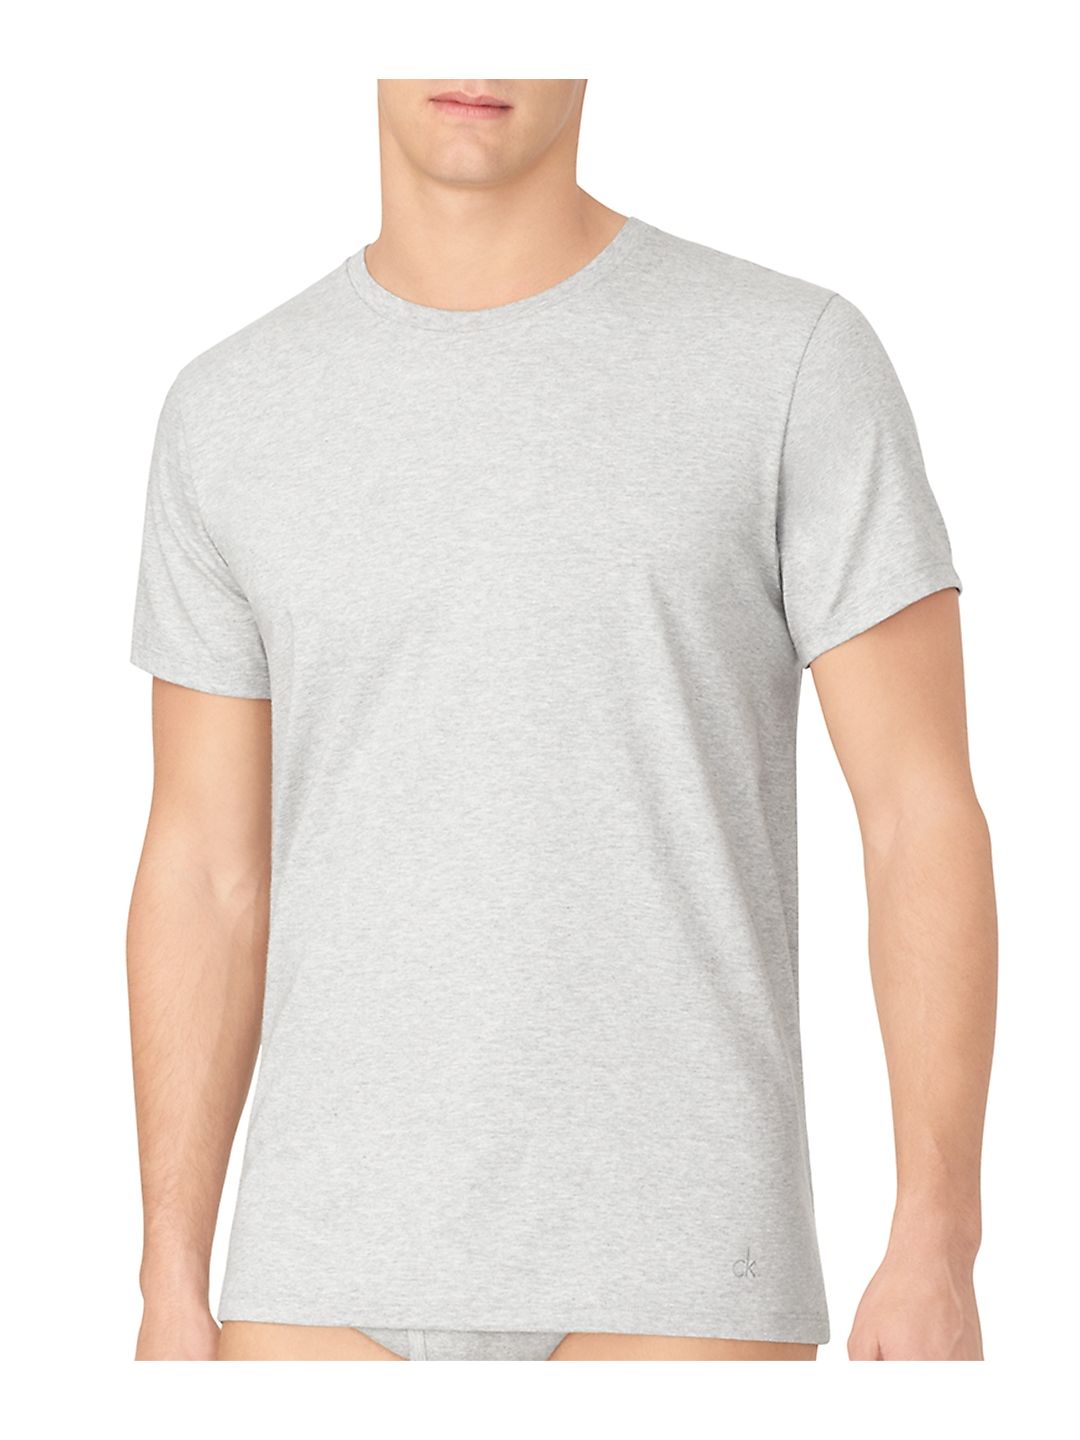 Men's 3-Pack Cotton Classic Short Sleeve Crew Neck T-Shirt - image 2 of 2